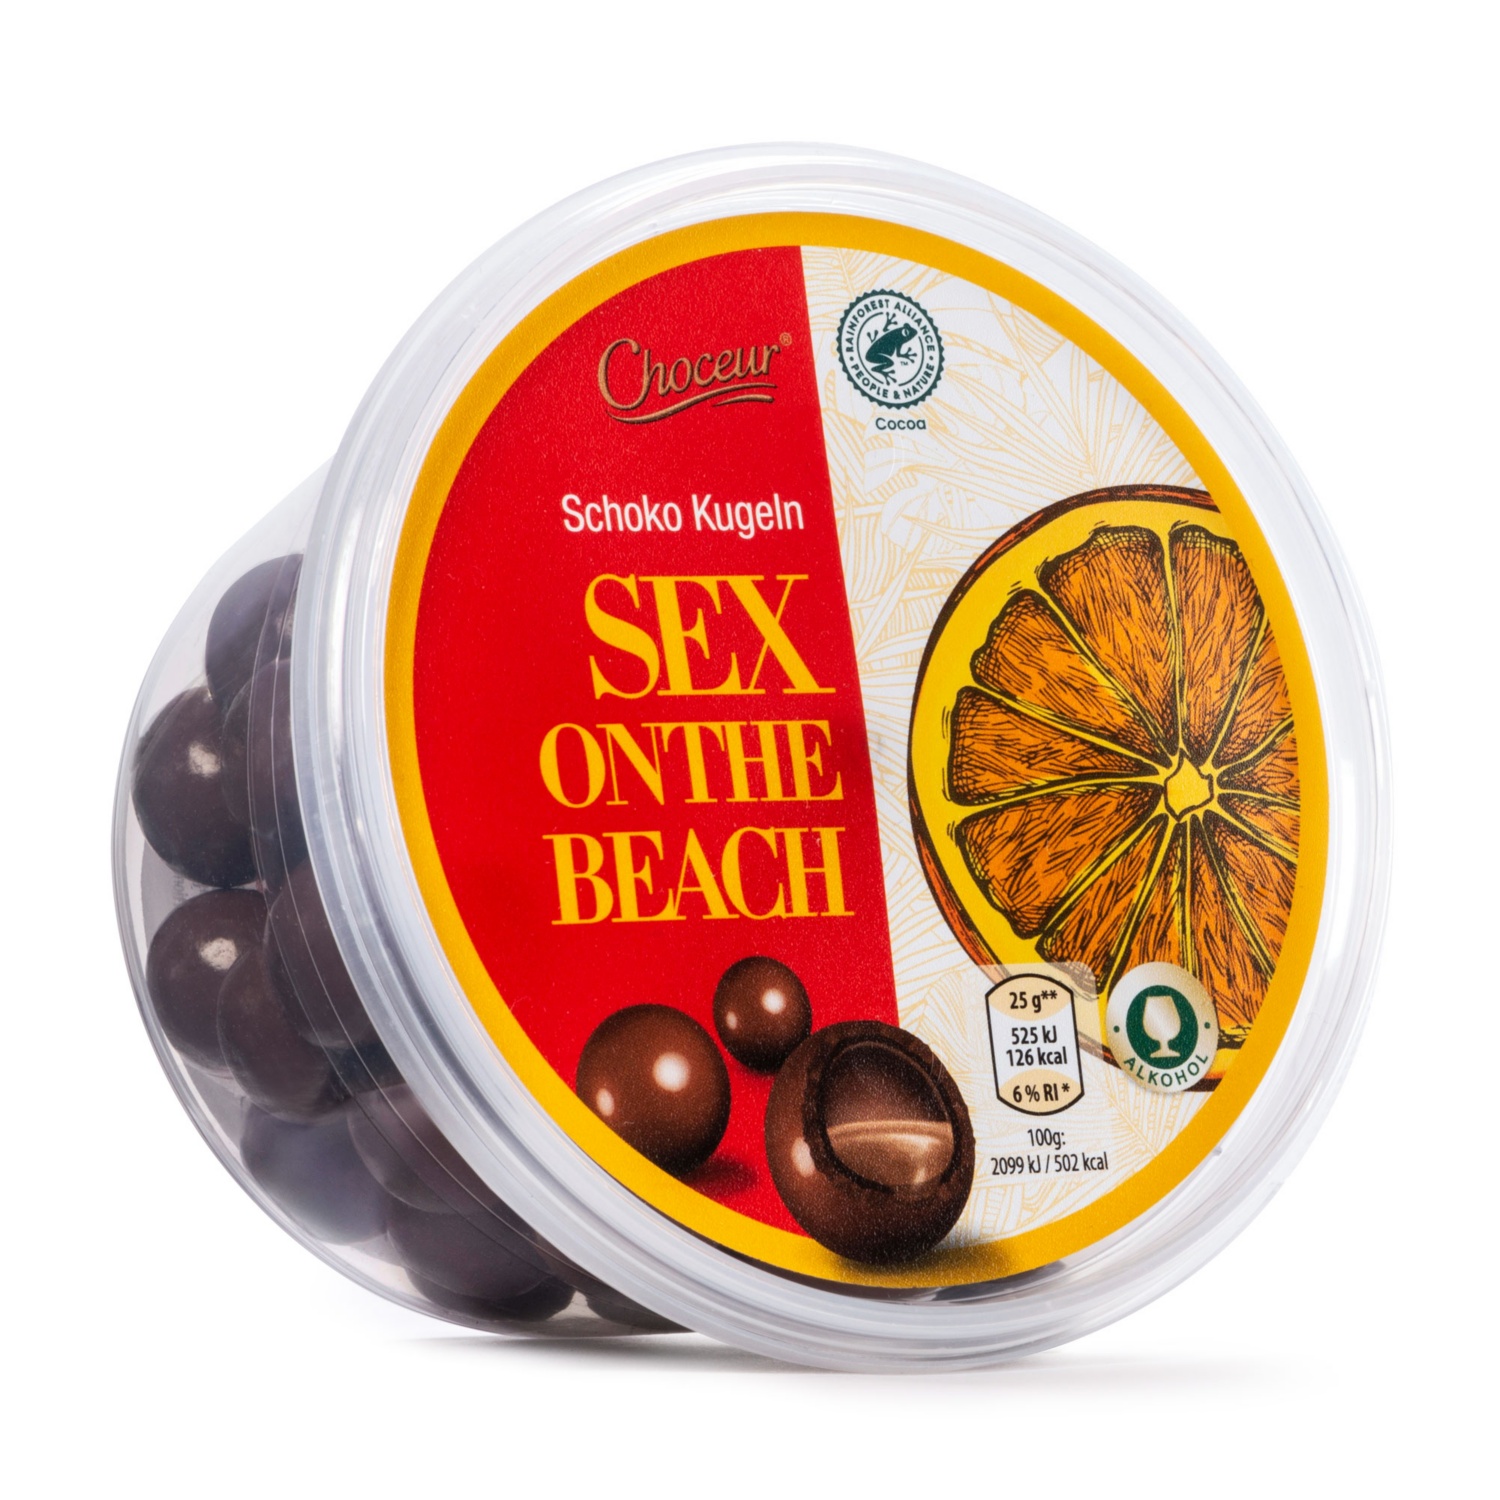 CHOCEUR Schoko-Kugeln mit Cocktailfüllung, Sex on the beach